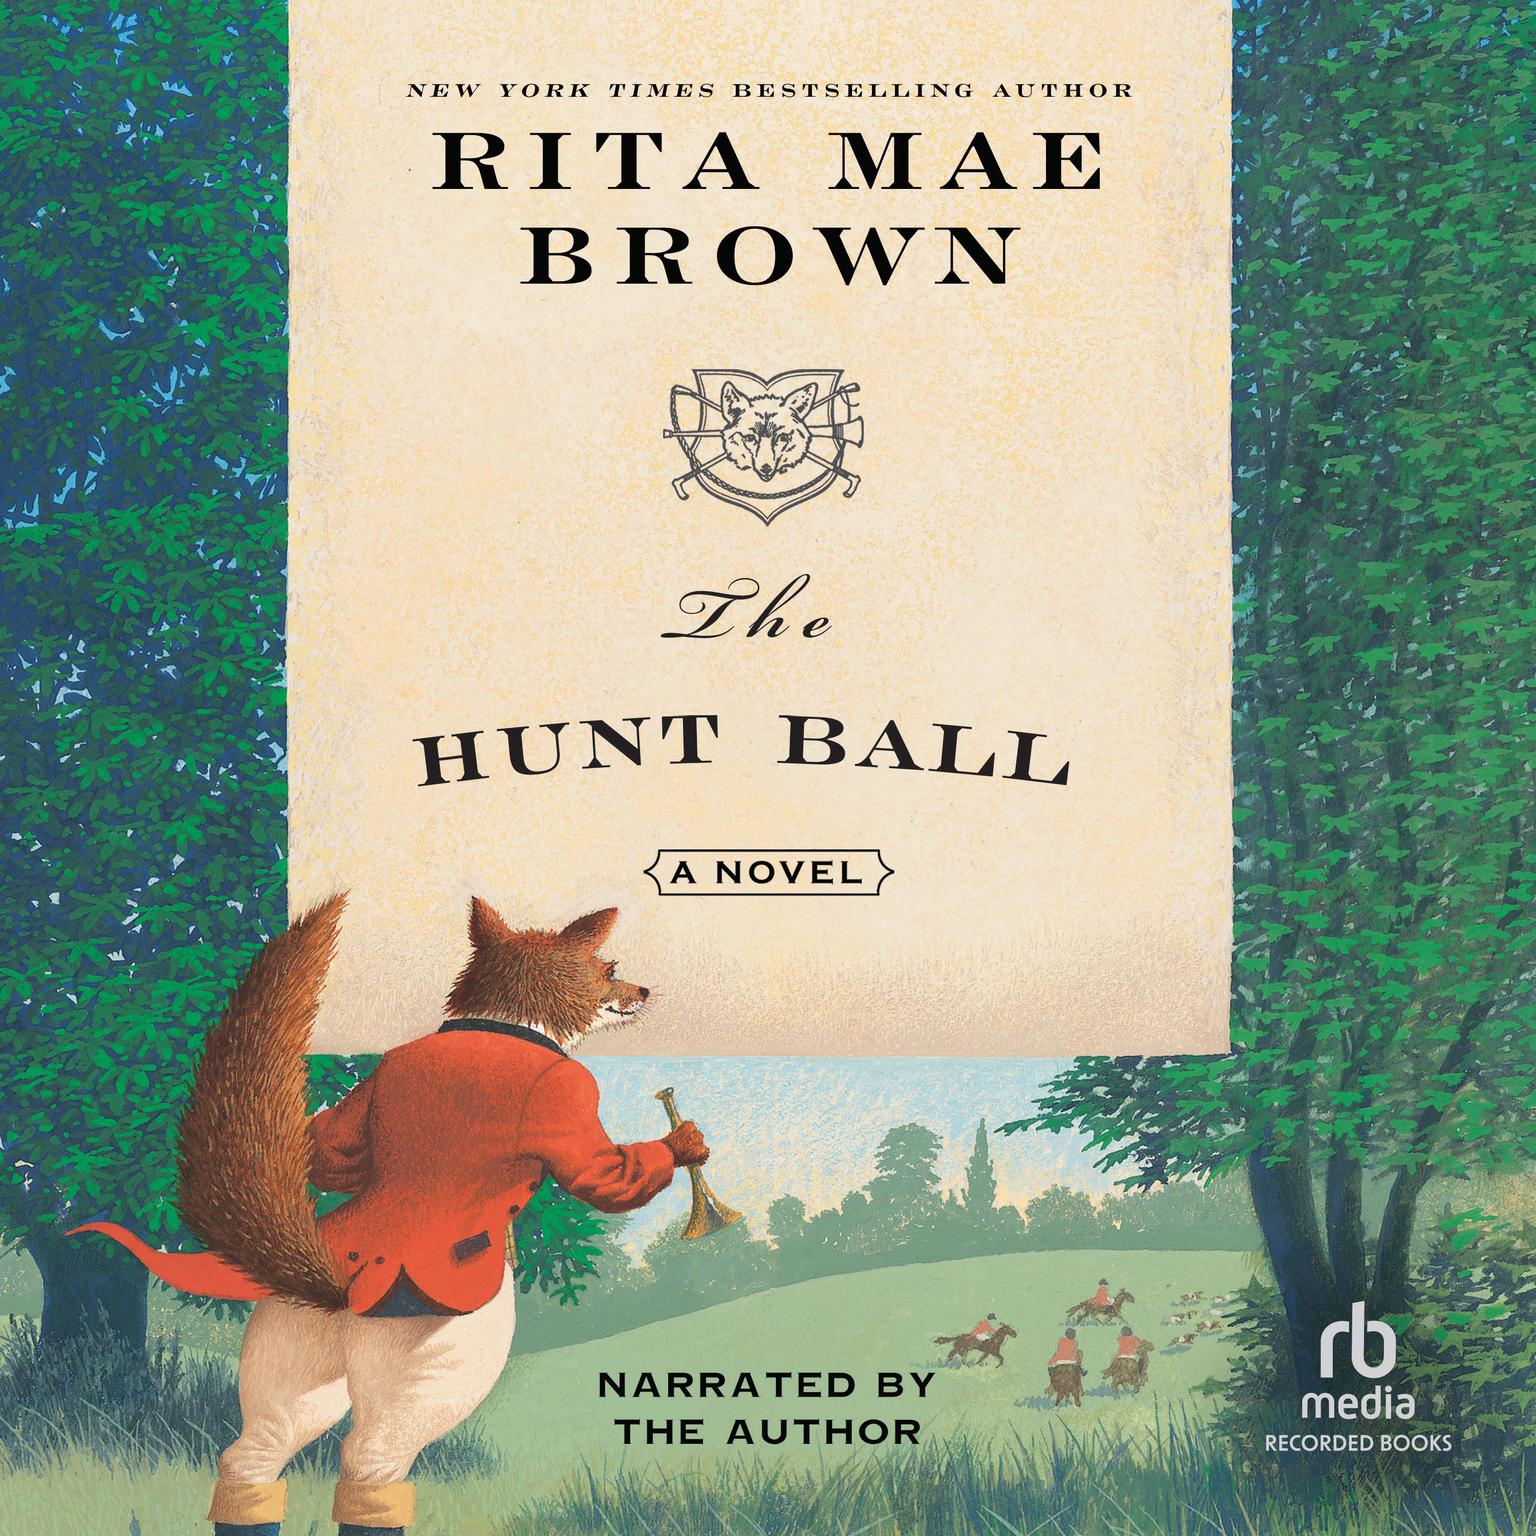 The Hunt Ball Audiobook, by Rita Mae Brown